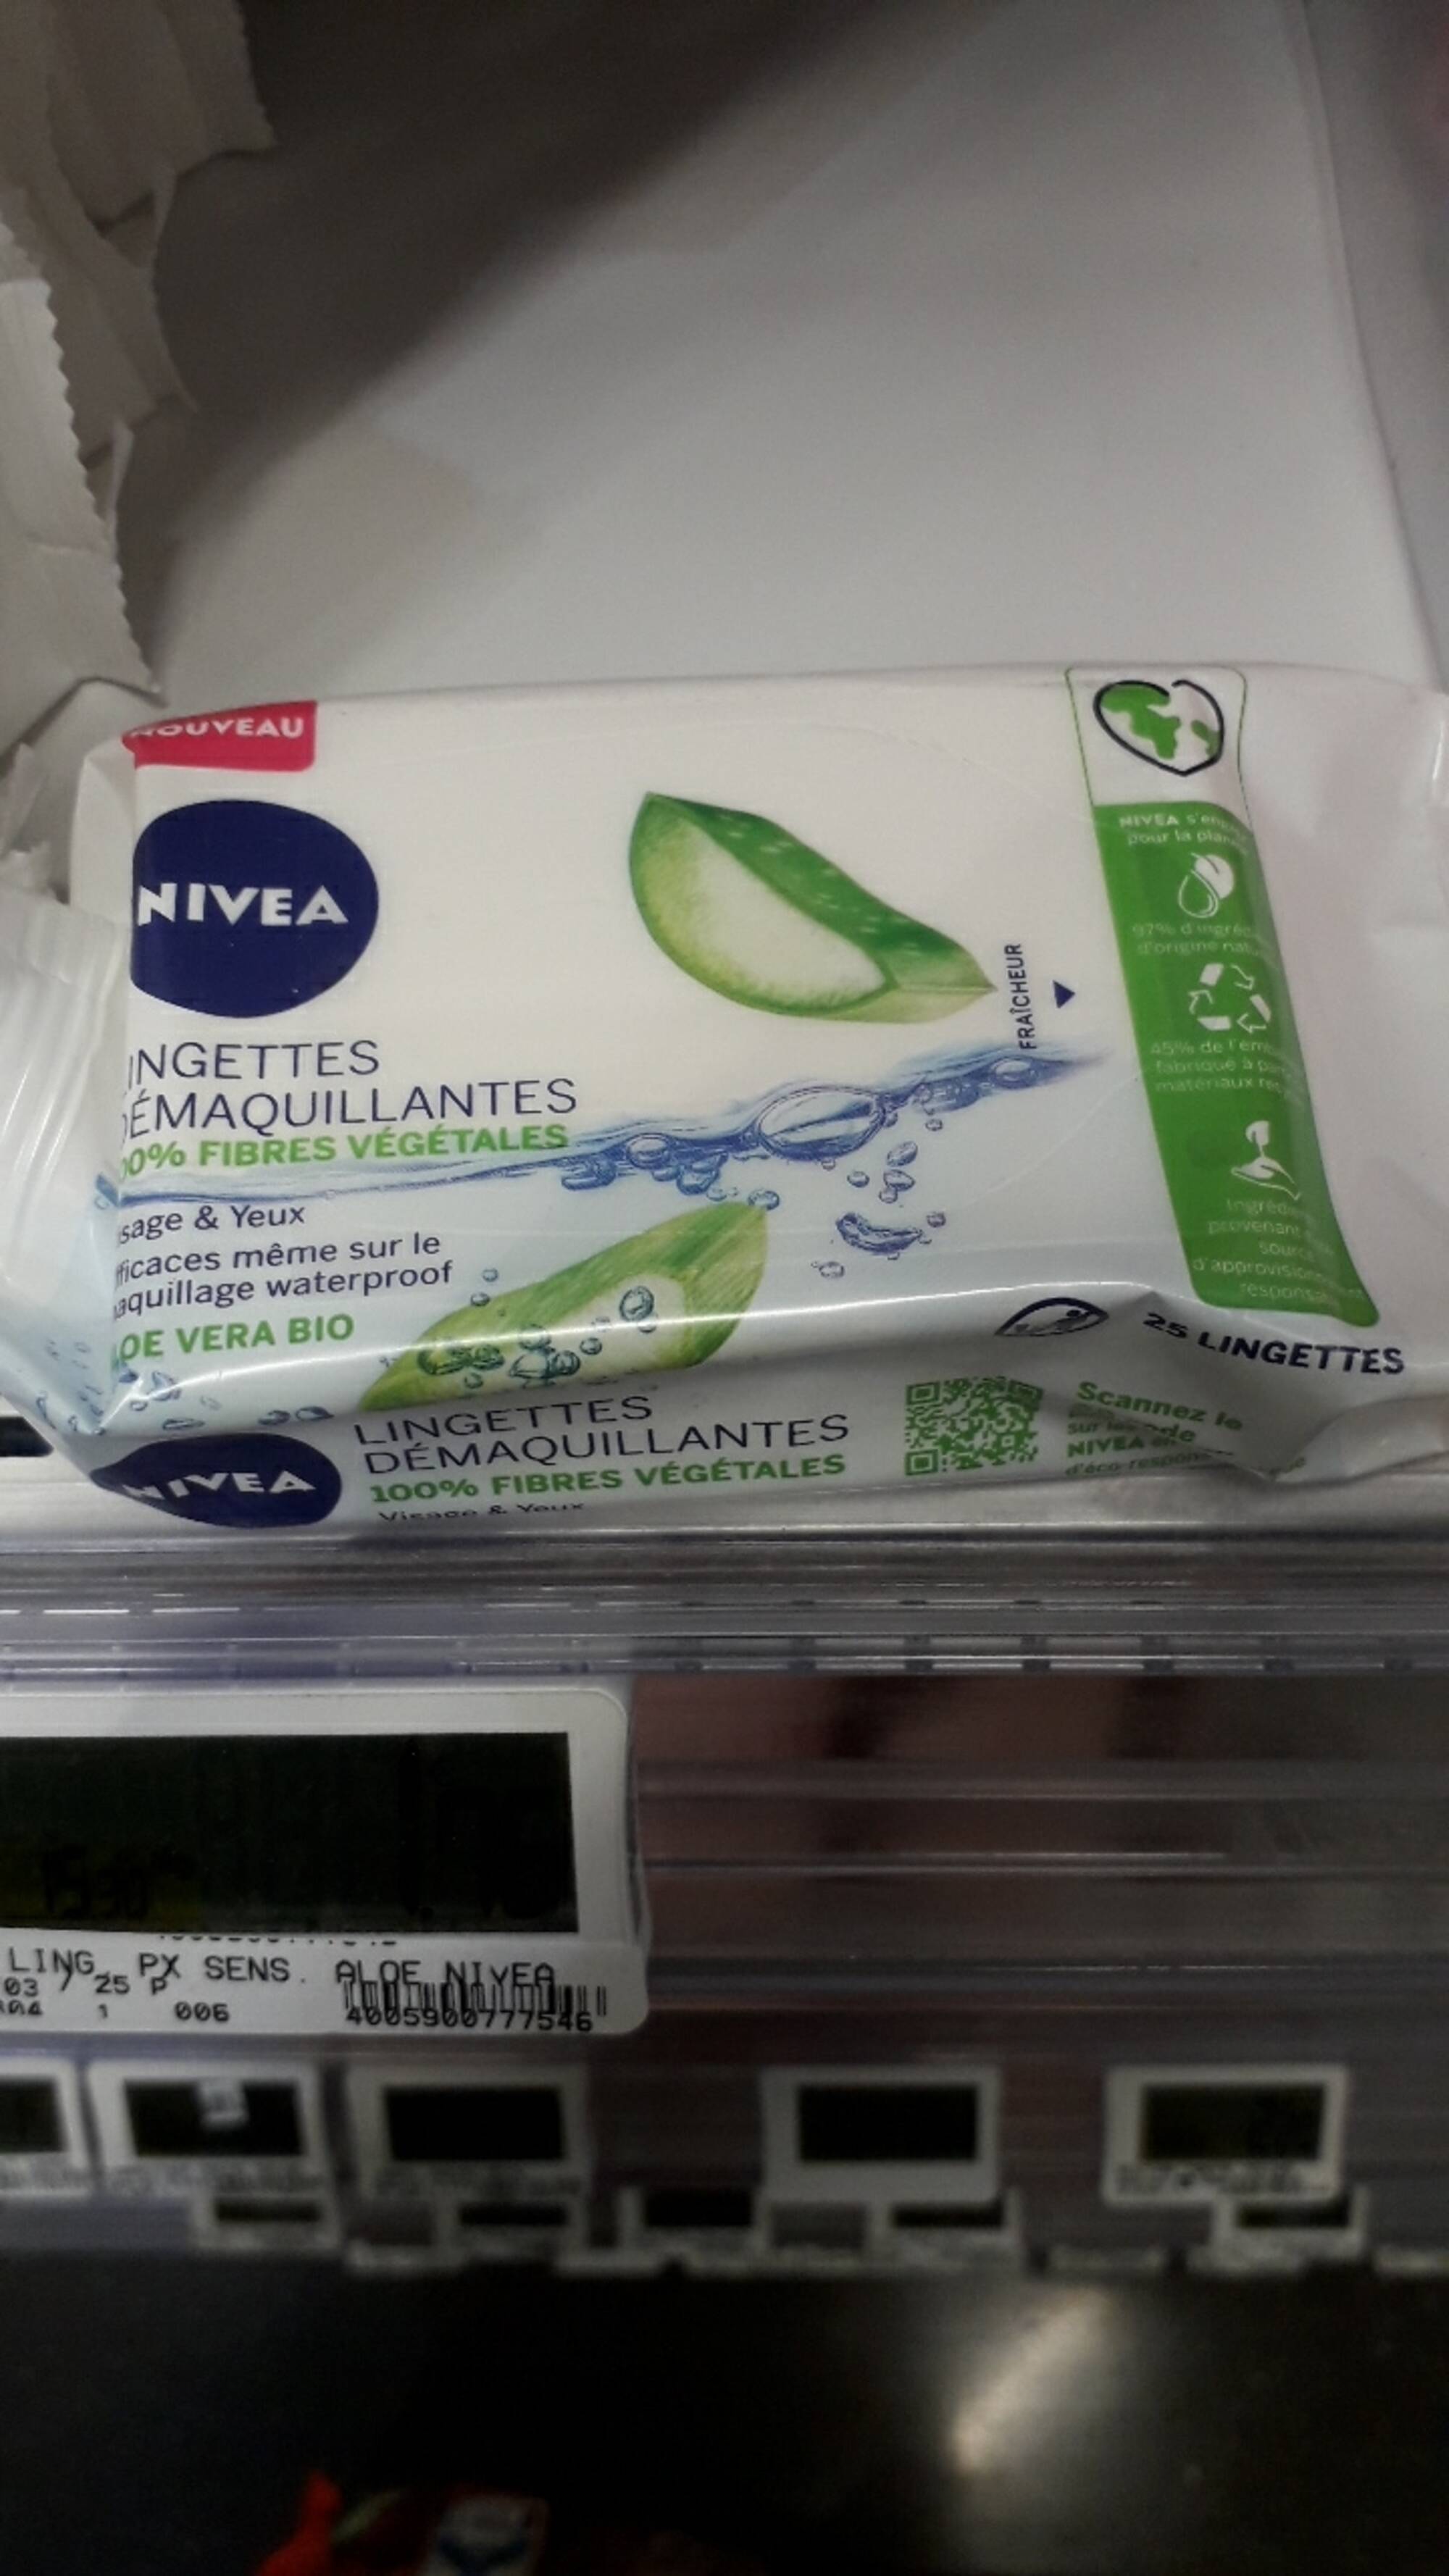 NIVEA - Aloe vera bio - Lingettes démaquillantes